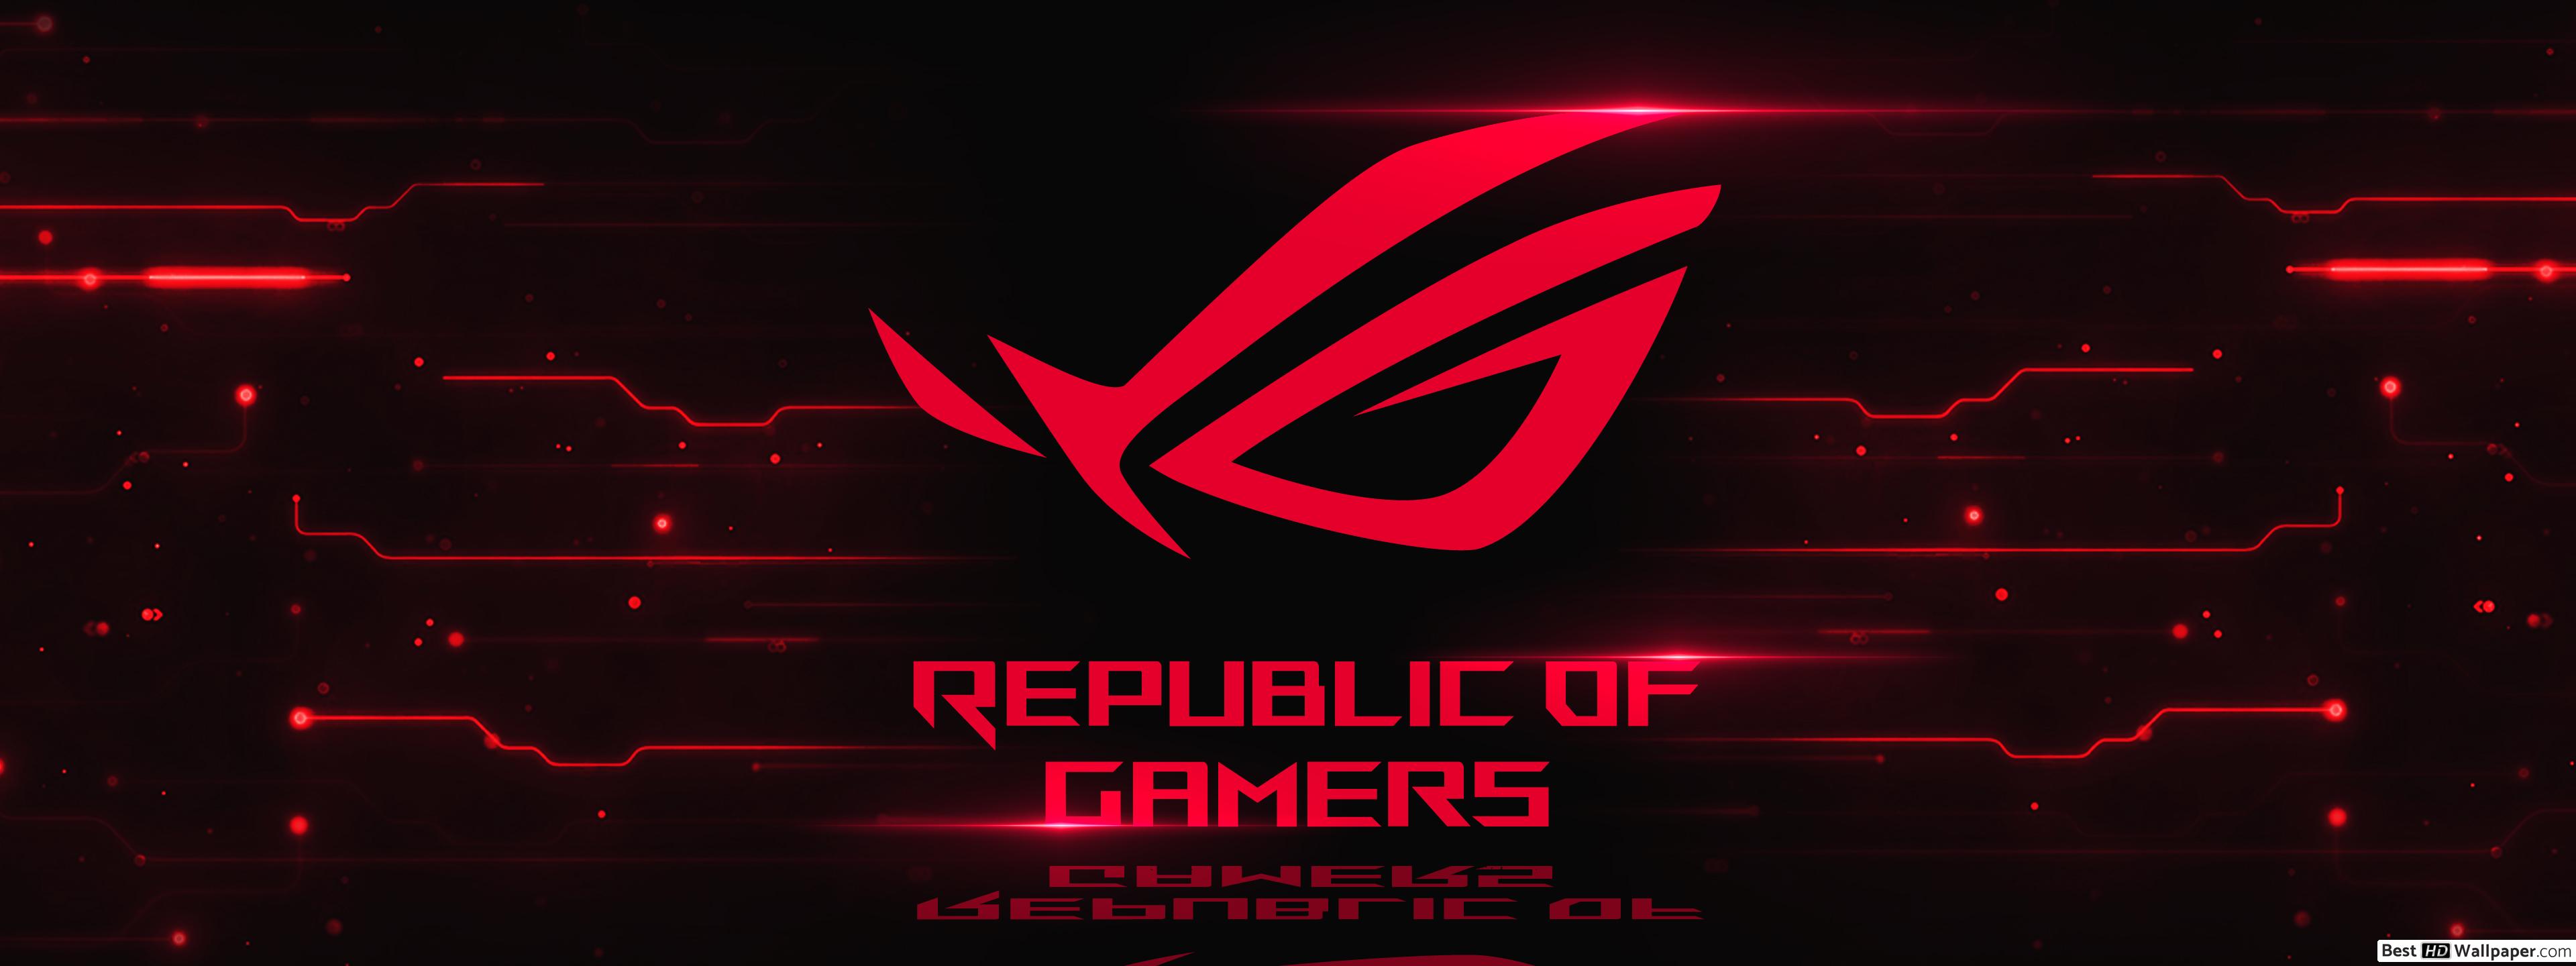 Asus ROG (Republic of Gamers) Advanced Tech LOGO HD wallpaper download